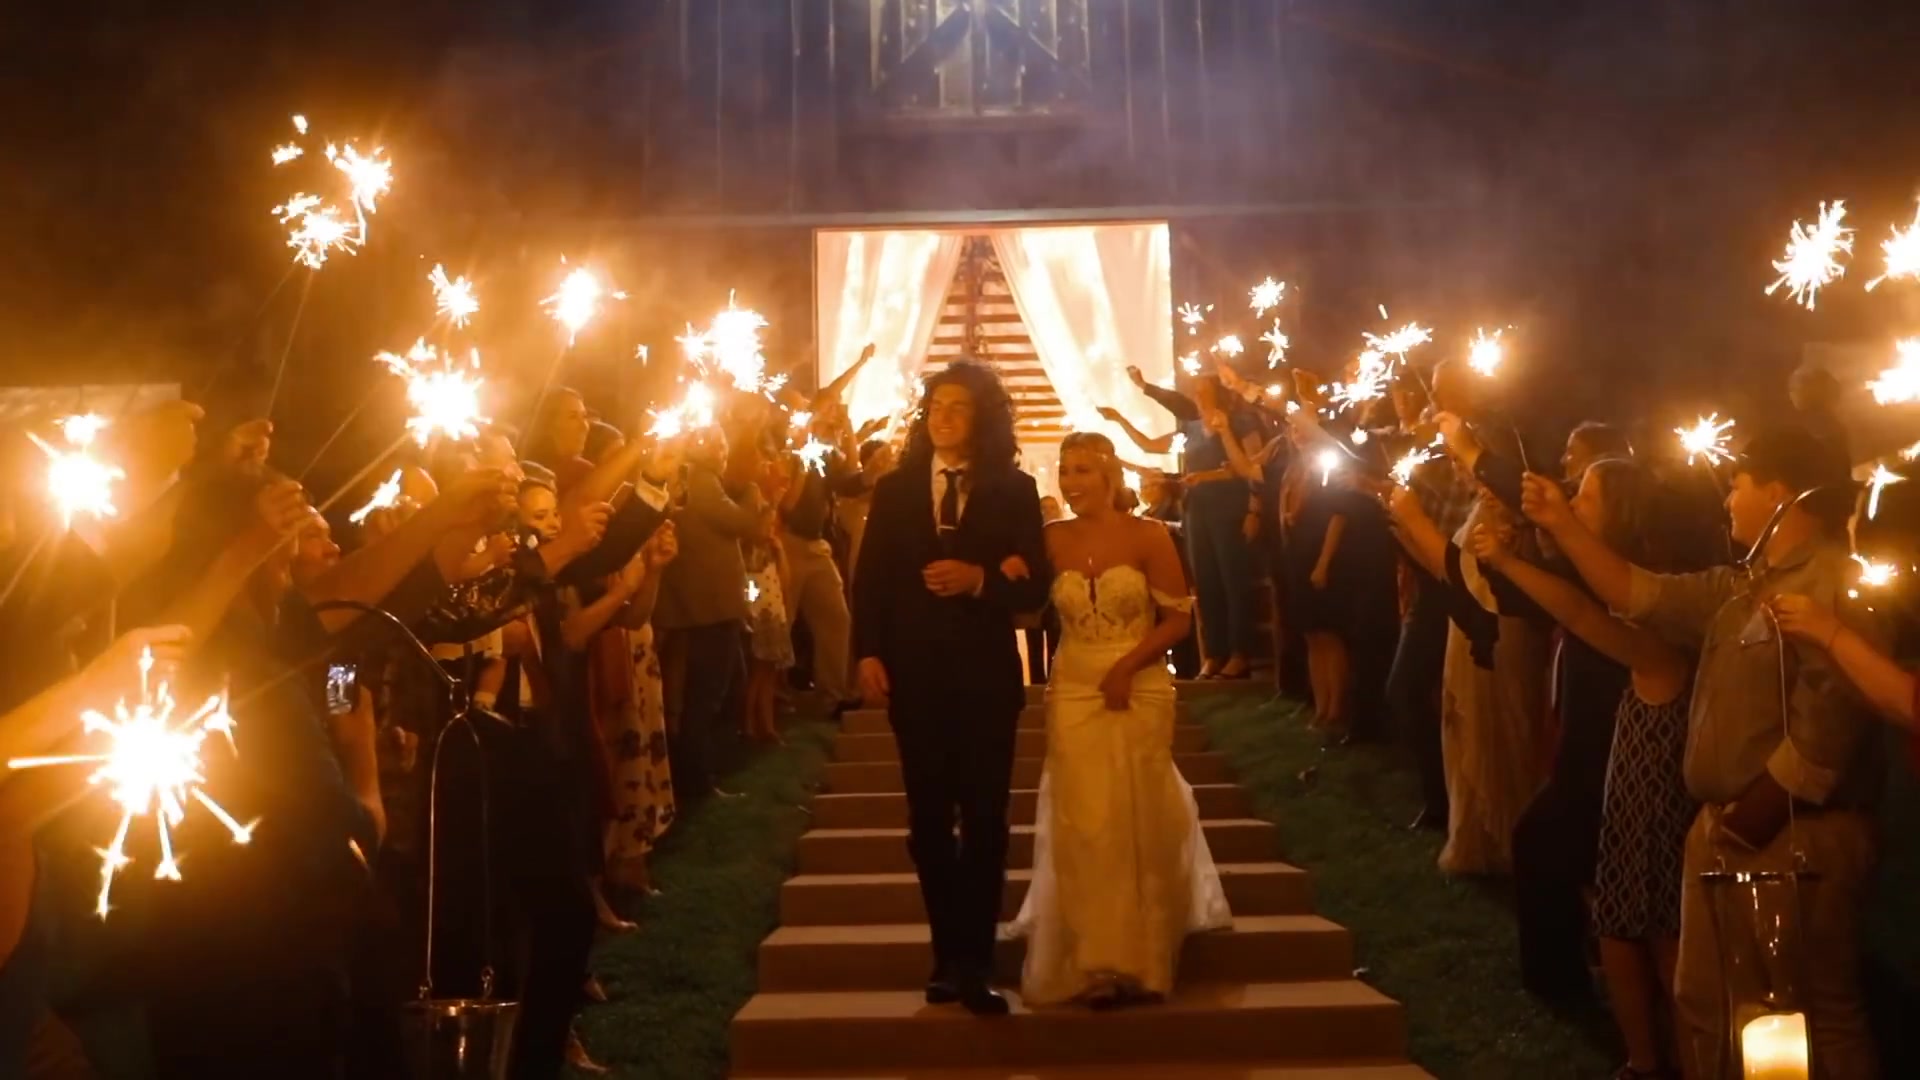 foehner-wedding-video-272.jpg